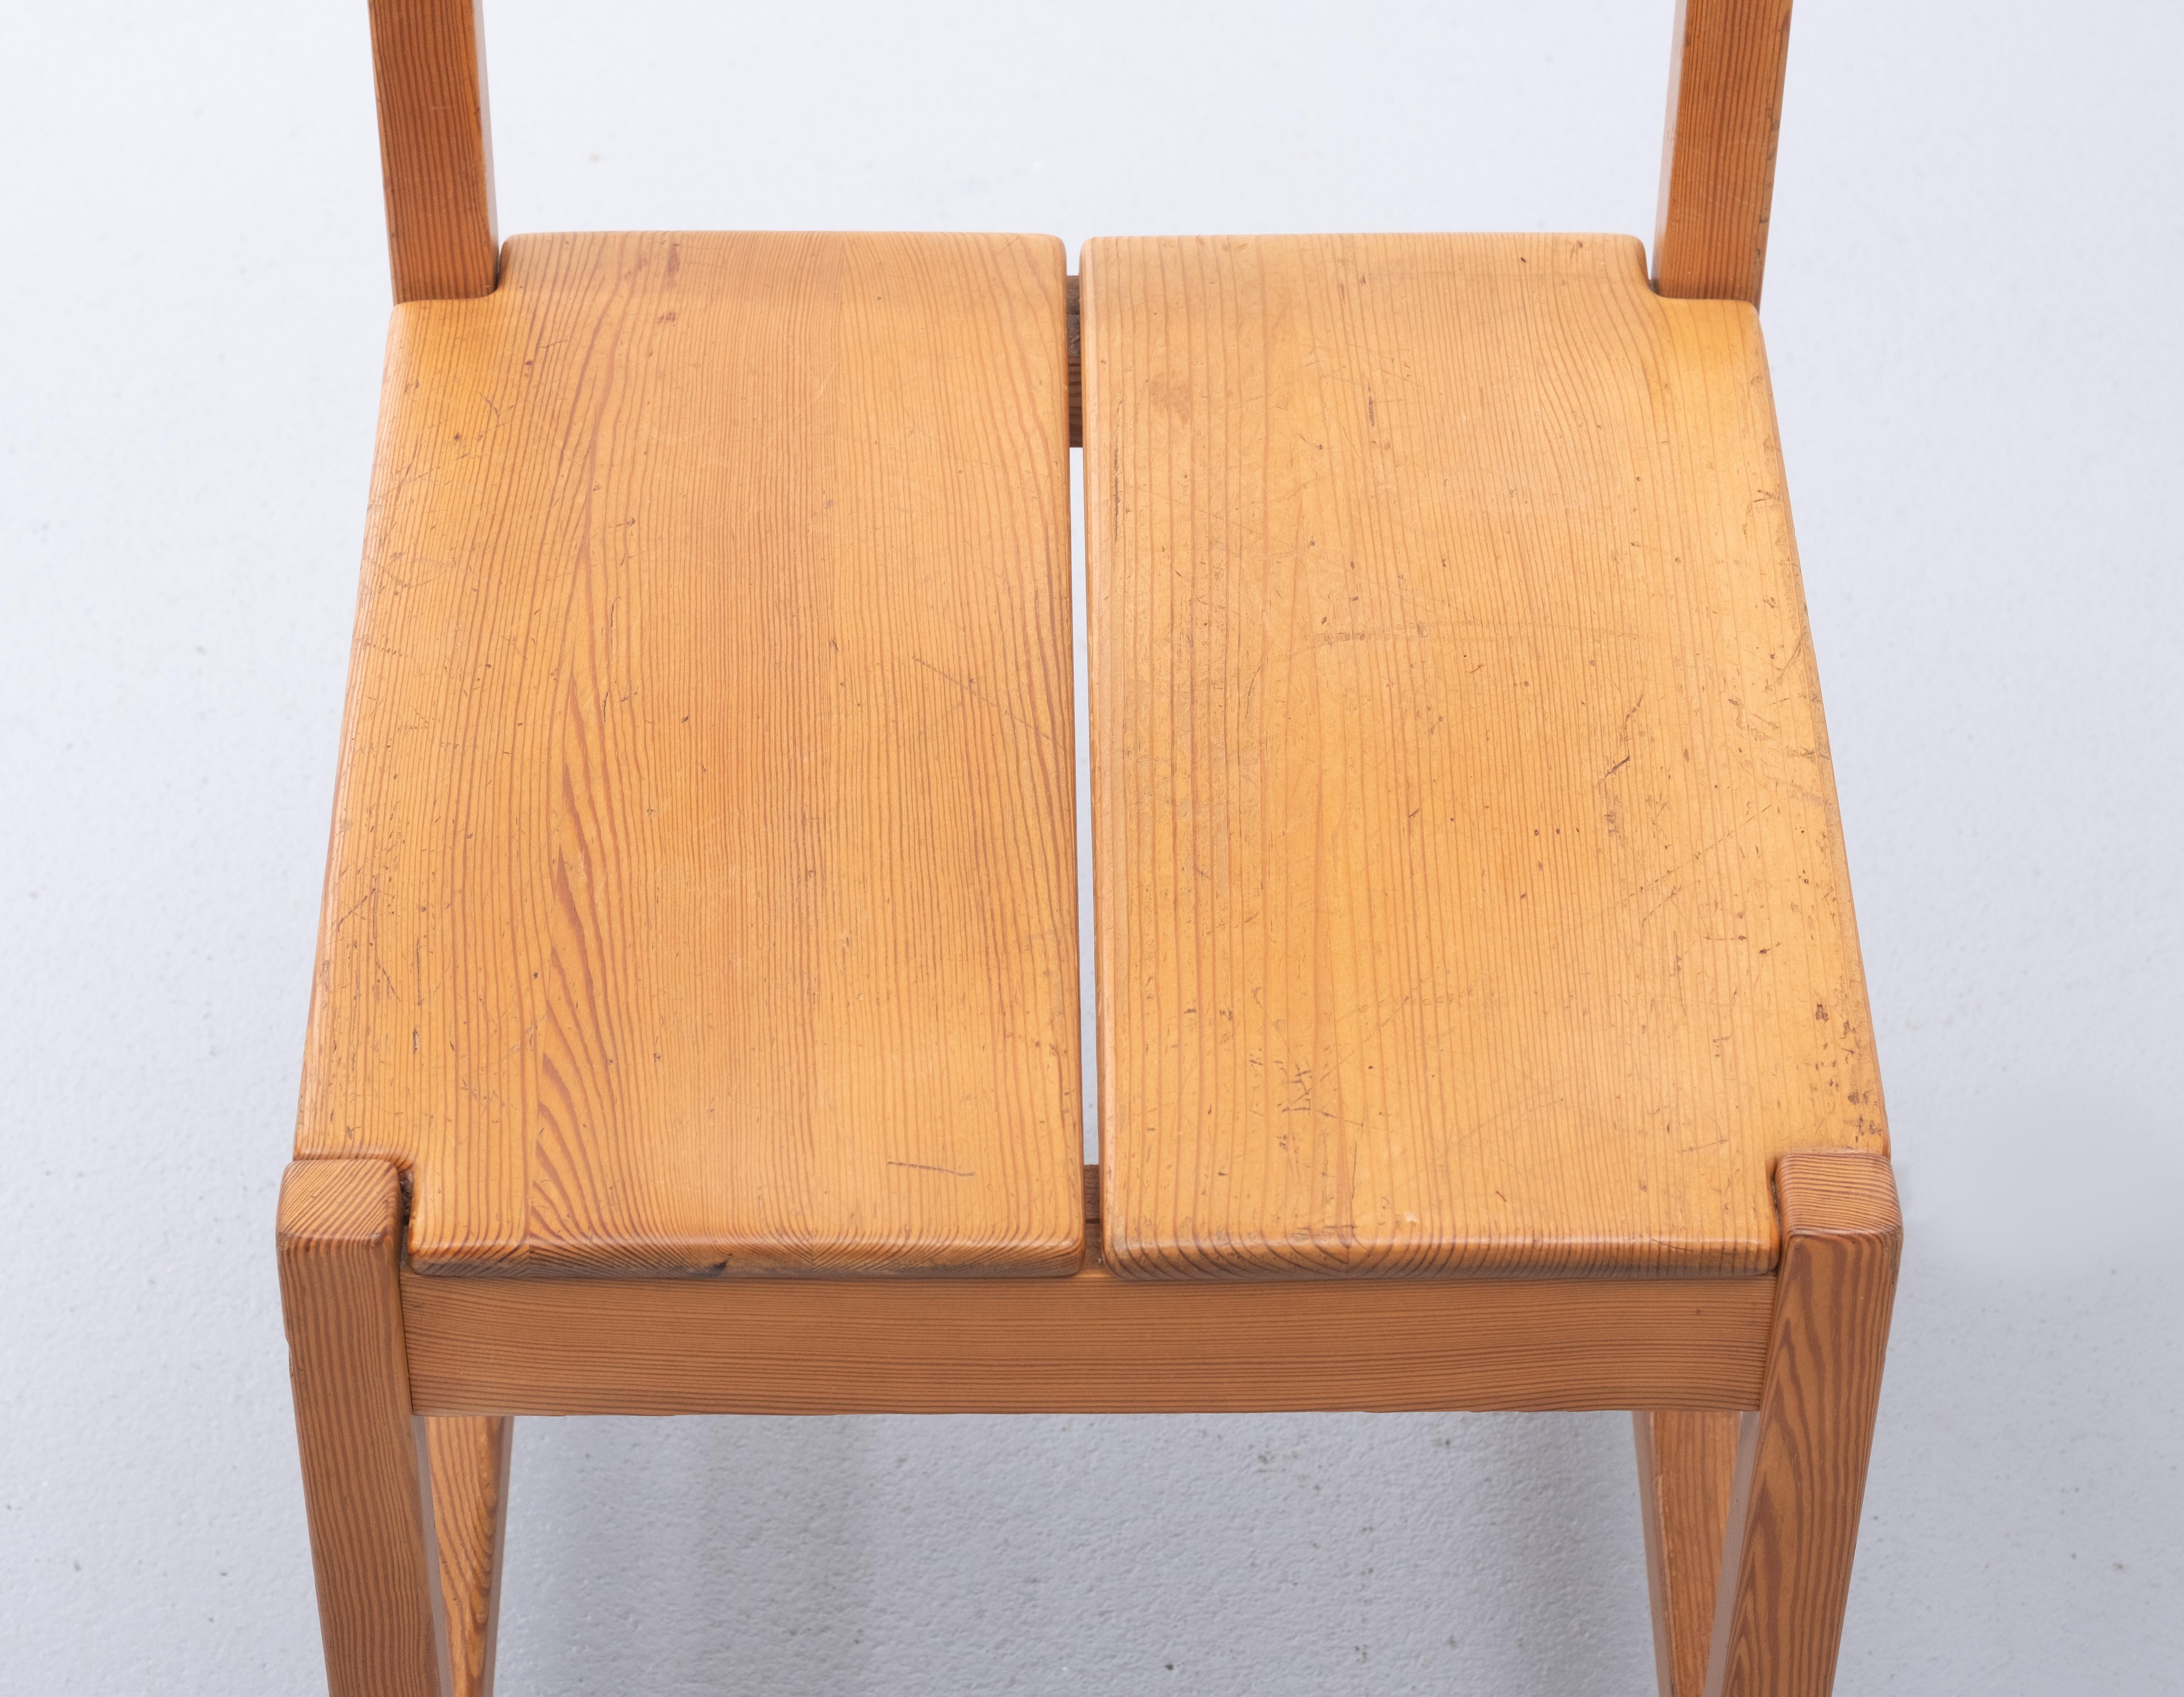 Tapio Wirkkala Pine Dining Chairs, 1960s For Sale 3